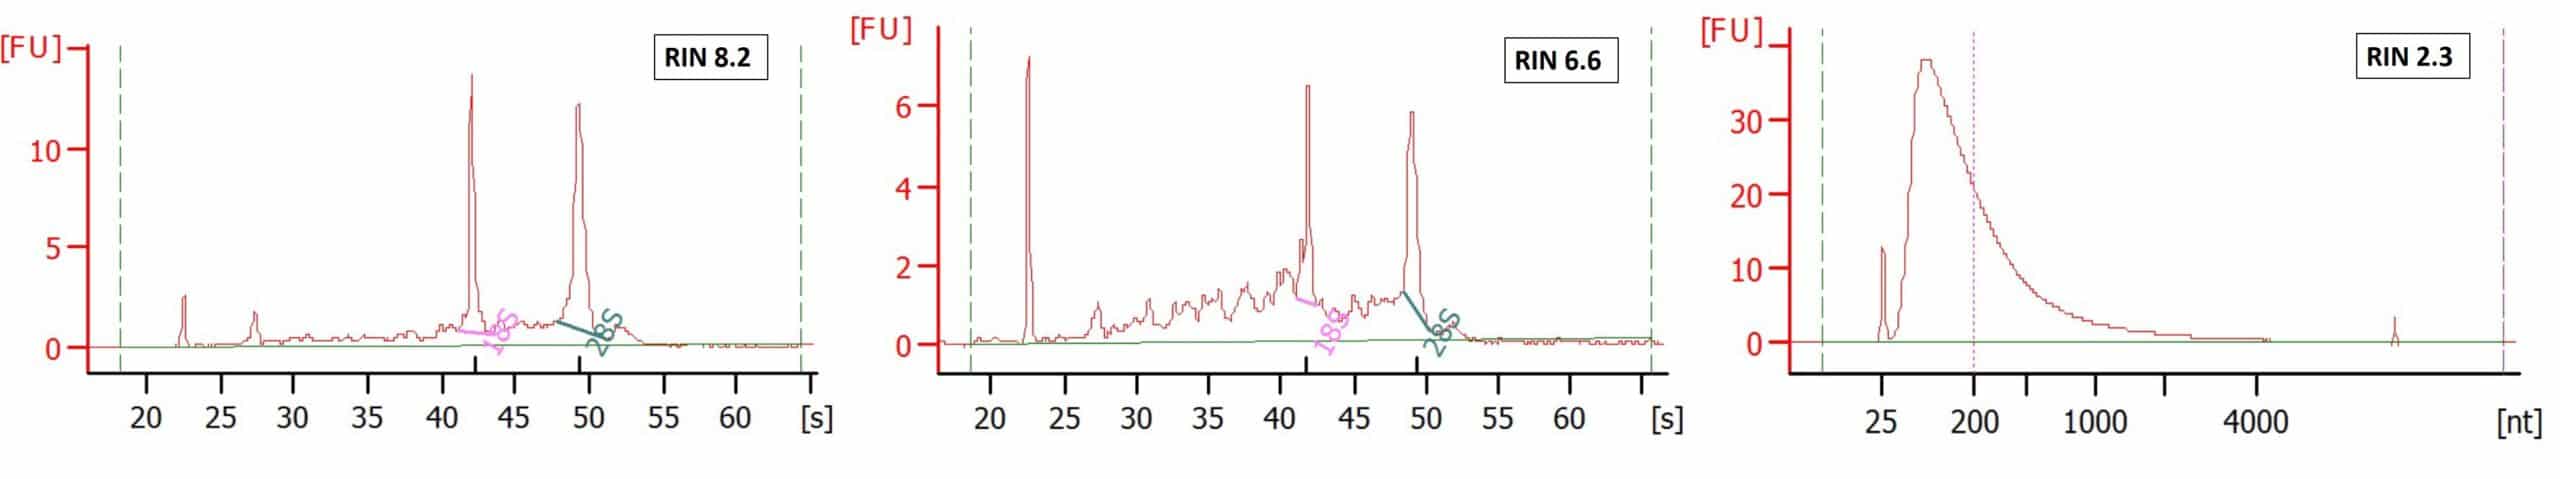 Fragment Analyzer RNA Measurement 3L FFPE RNA Sequencing